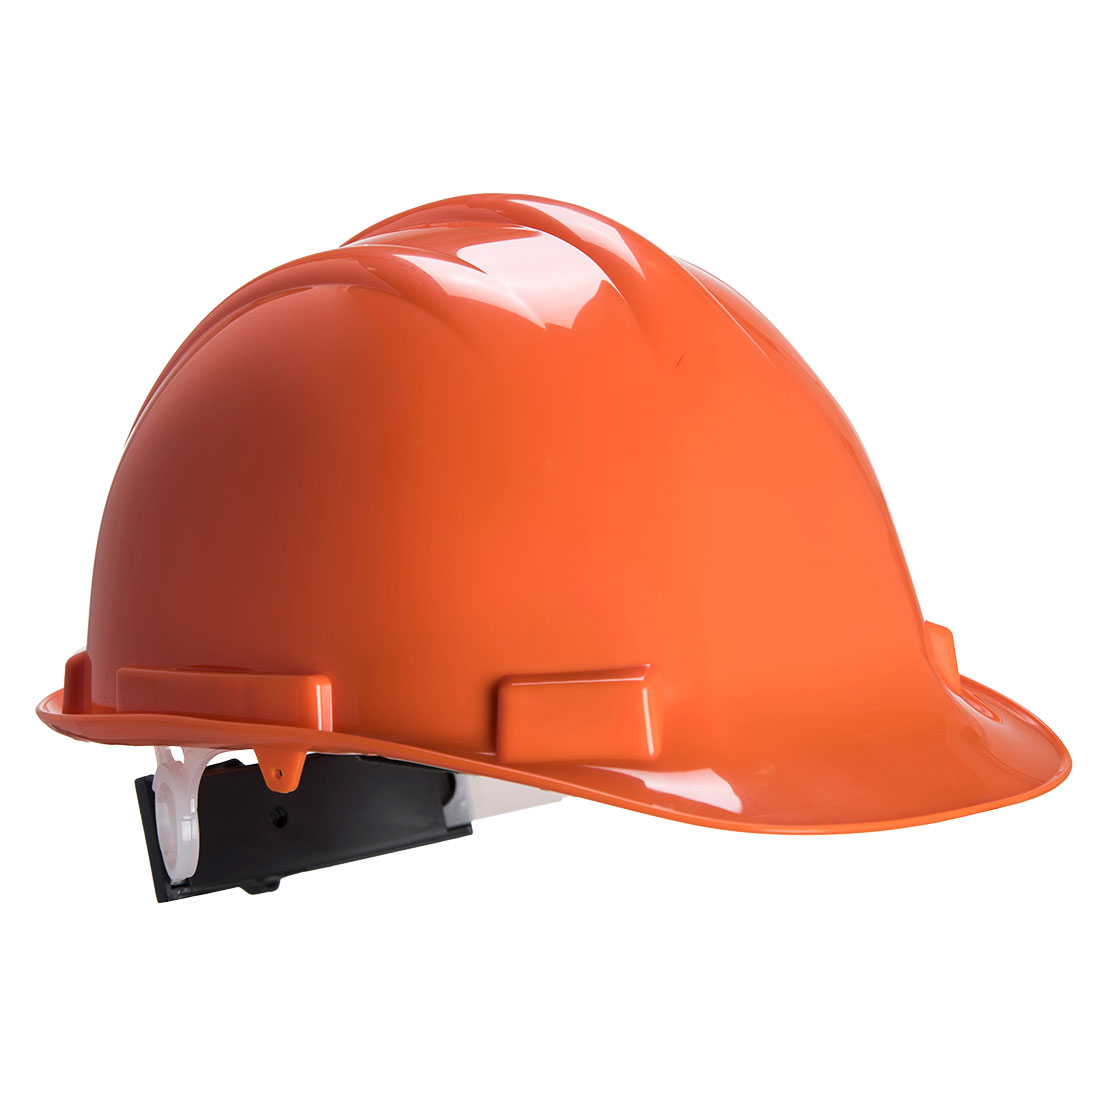 Expertbase Wheel Safety Helmet - Orange